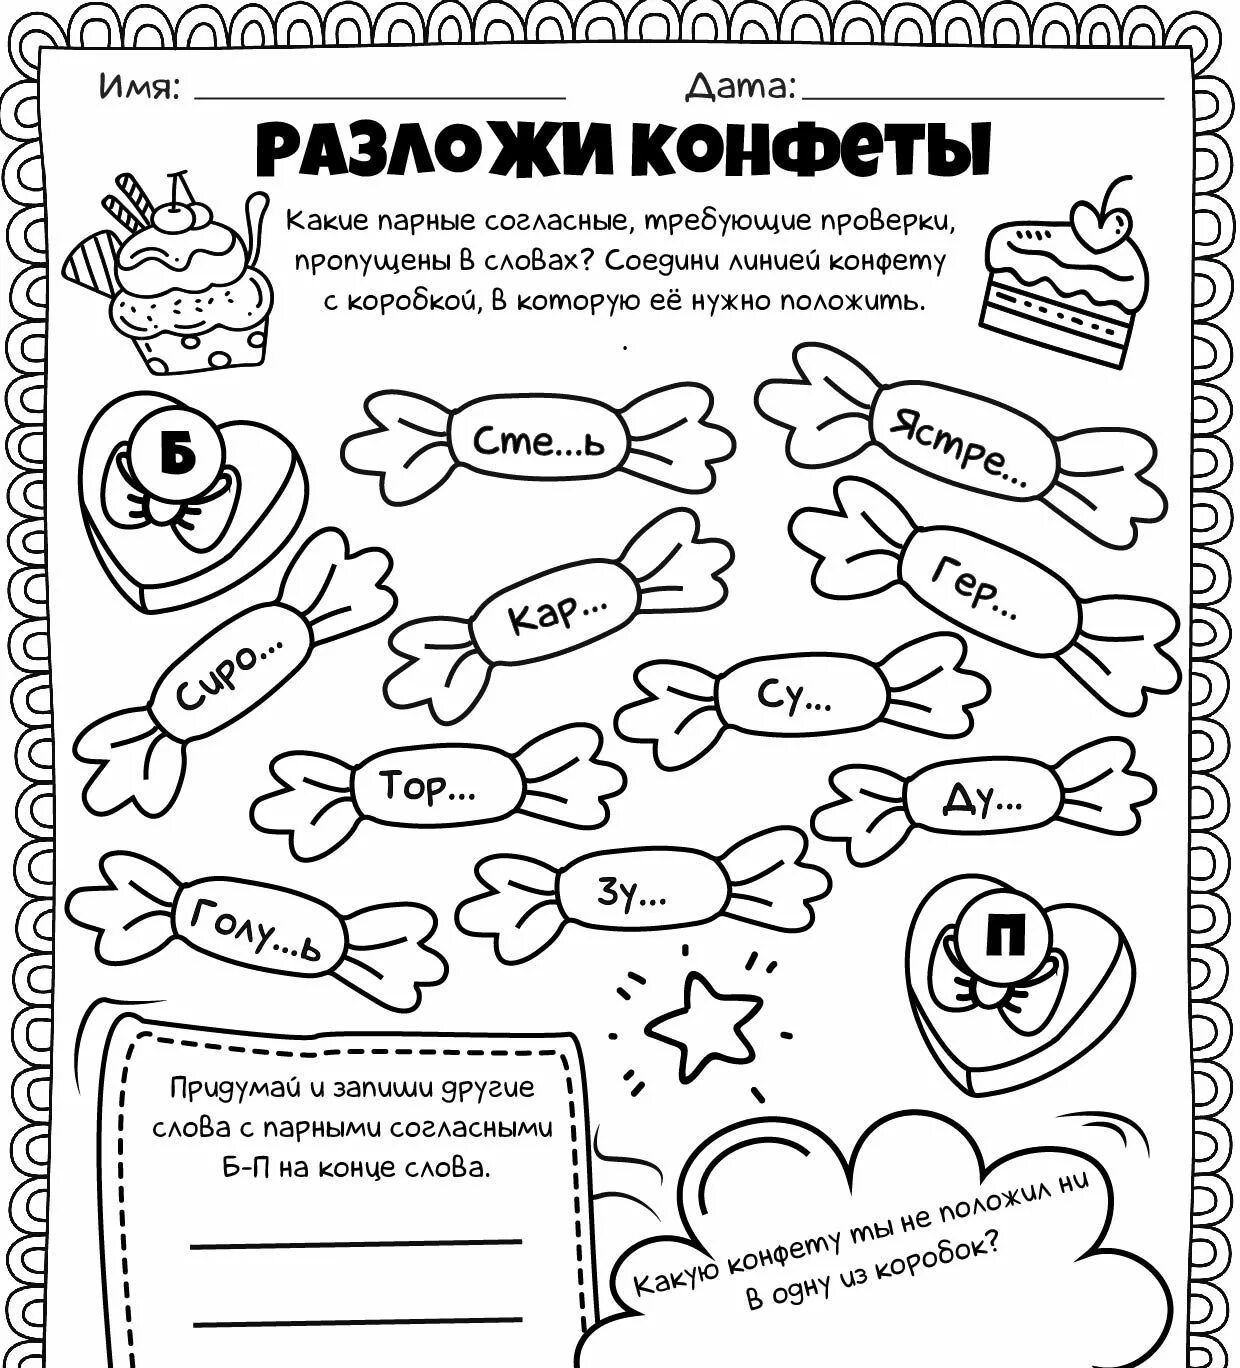 Цветная раскраска парных согласных по русскому языку для 2 класса